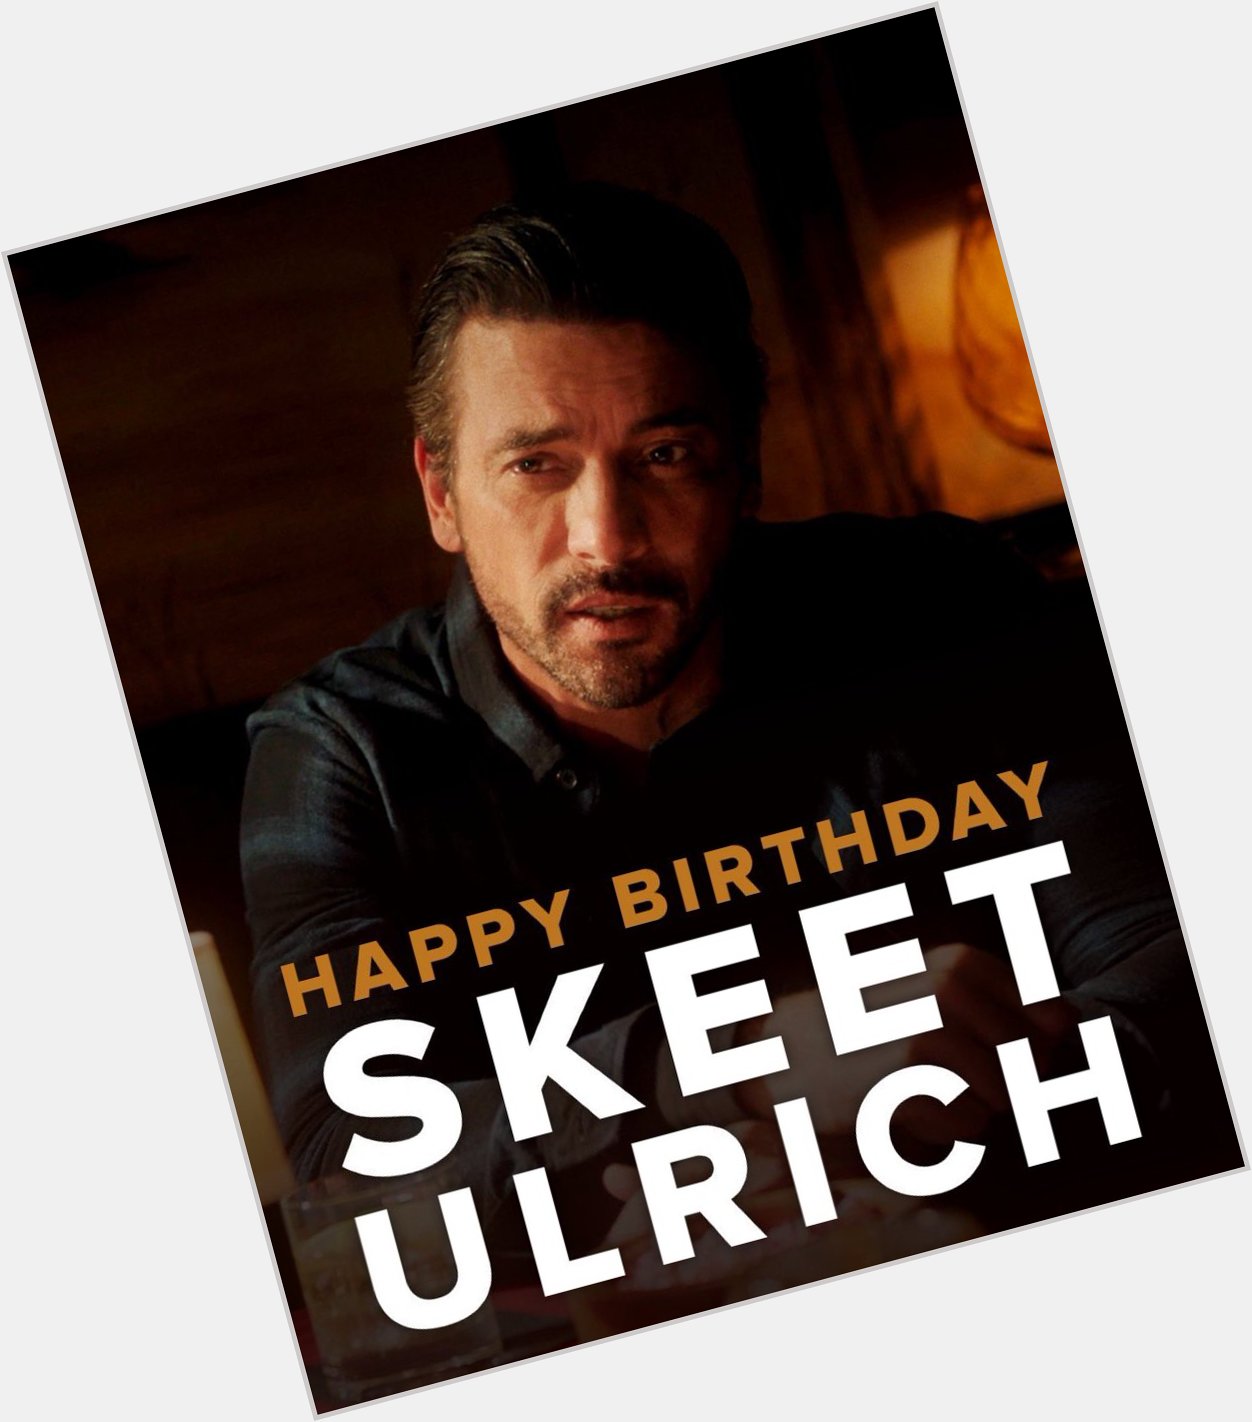 Happy birthday, Skeet Ulrich  